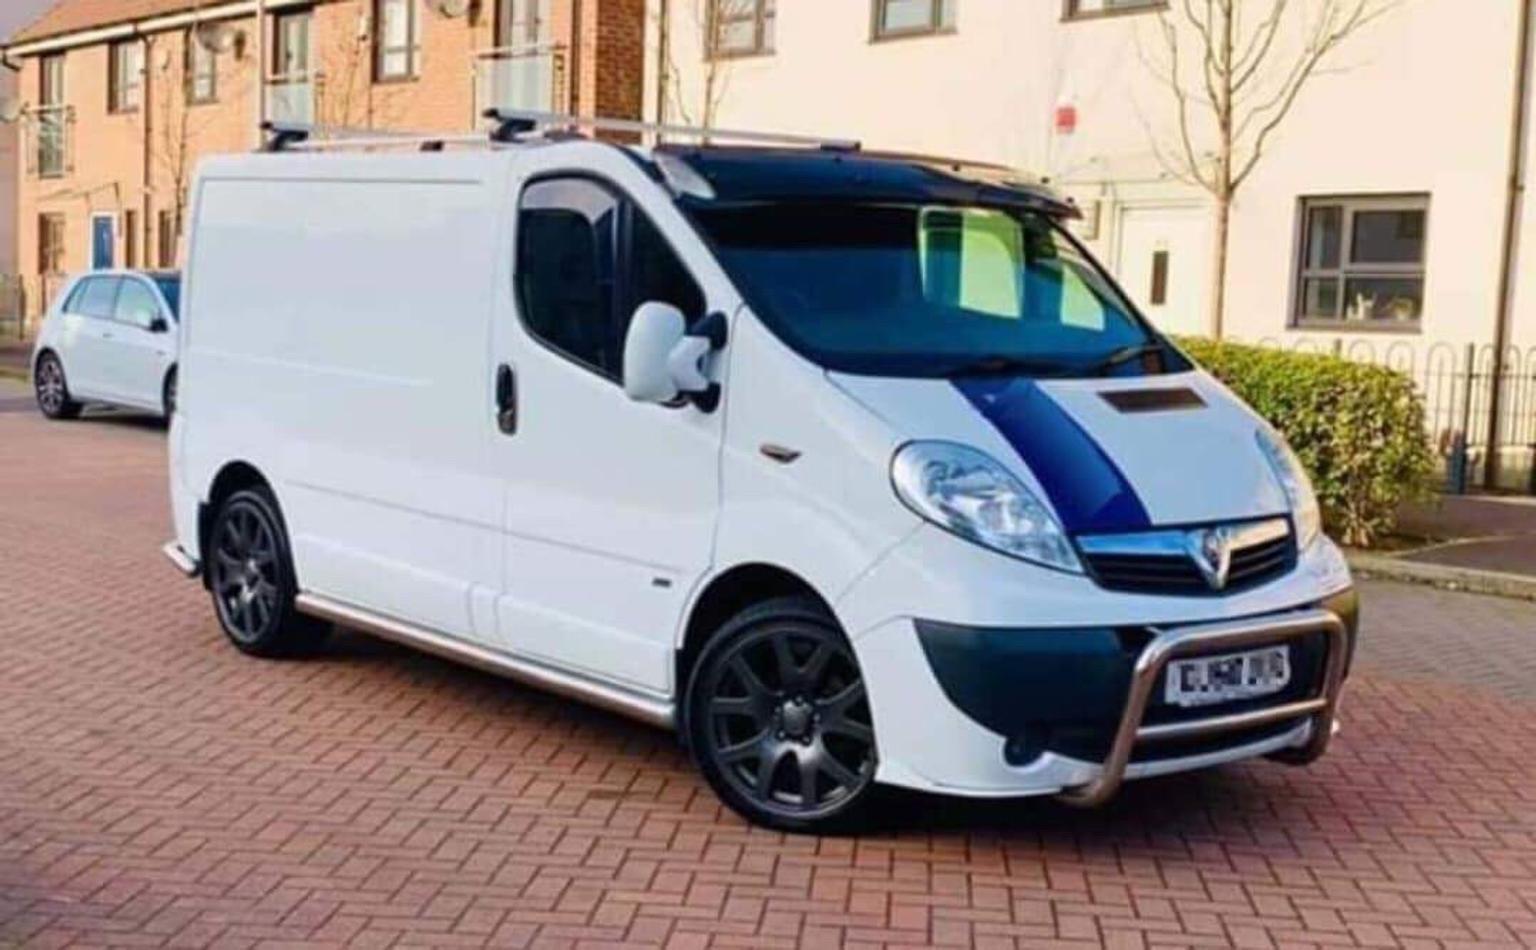 vans for sale merseyside ebay